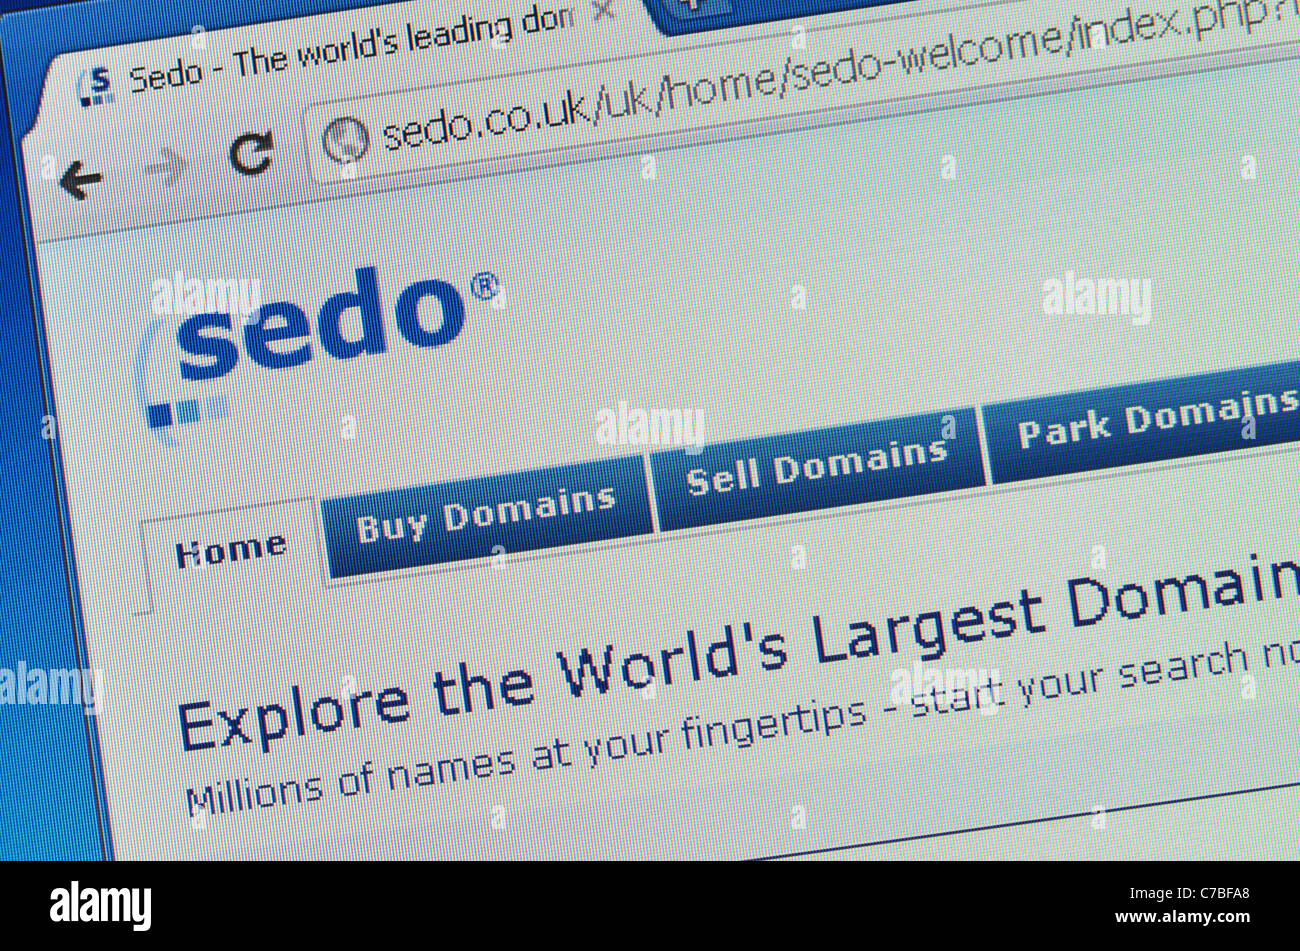 Sedo domain parking selling website screenshot Stock Photo - Alamy